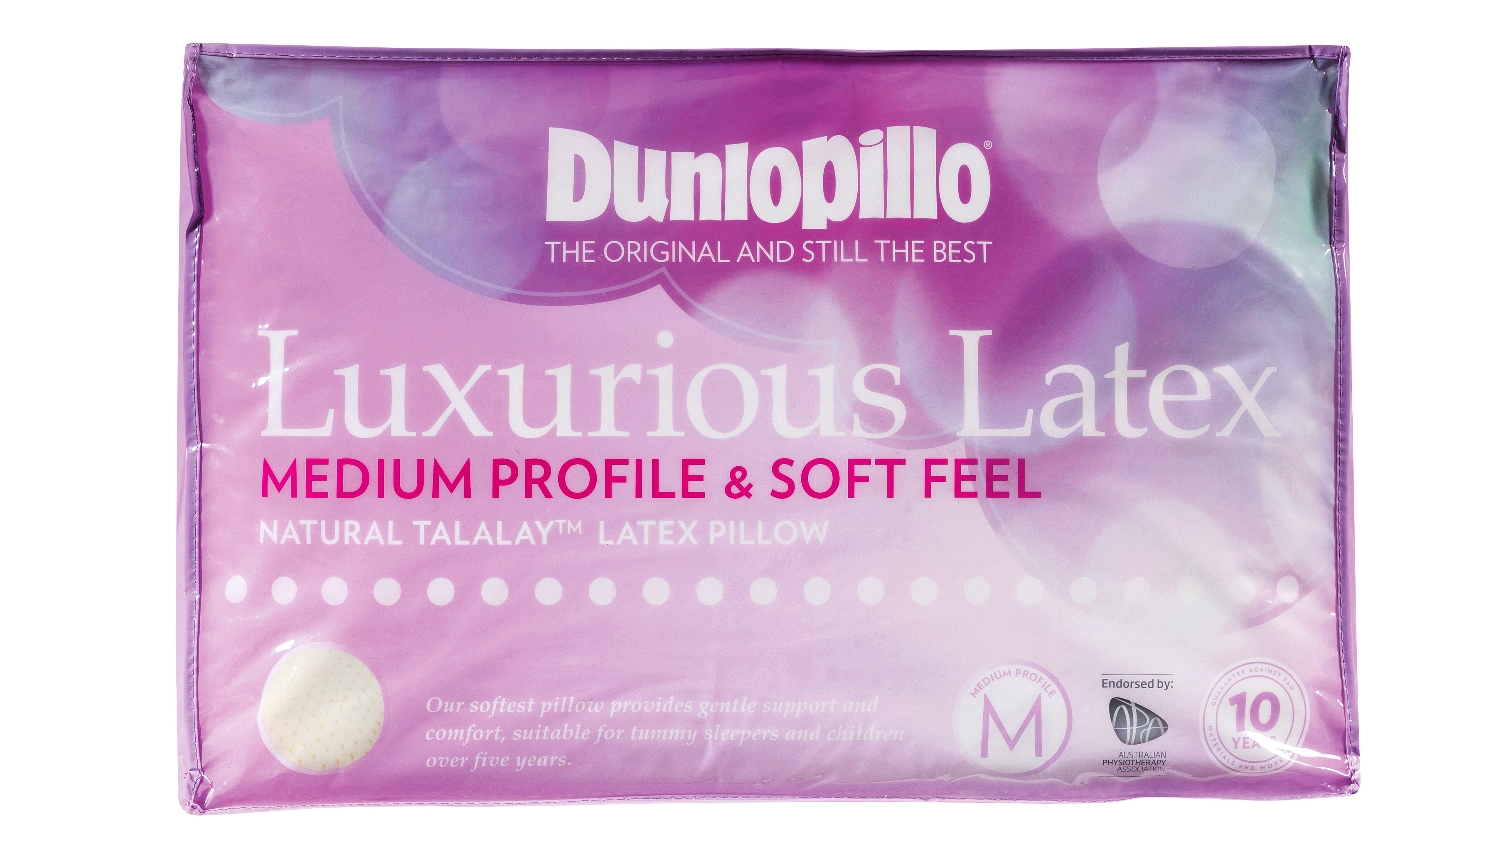 Dunlopillo Luxurious Latex Medium Profile & Soft Feel Pillow 